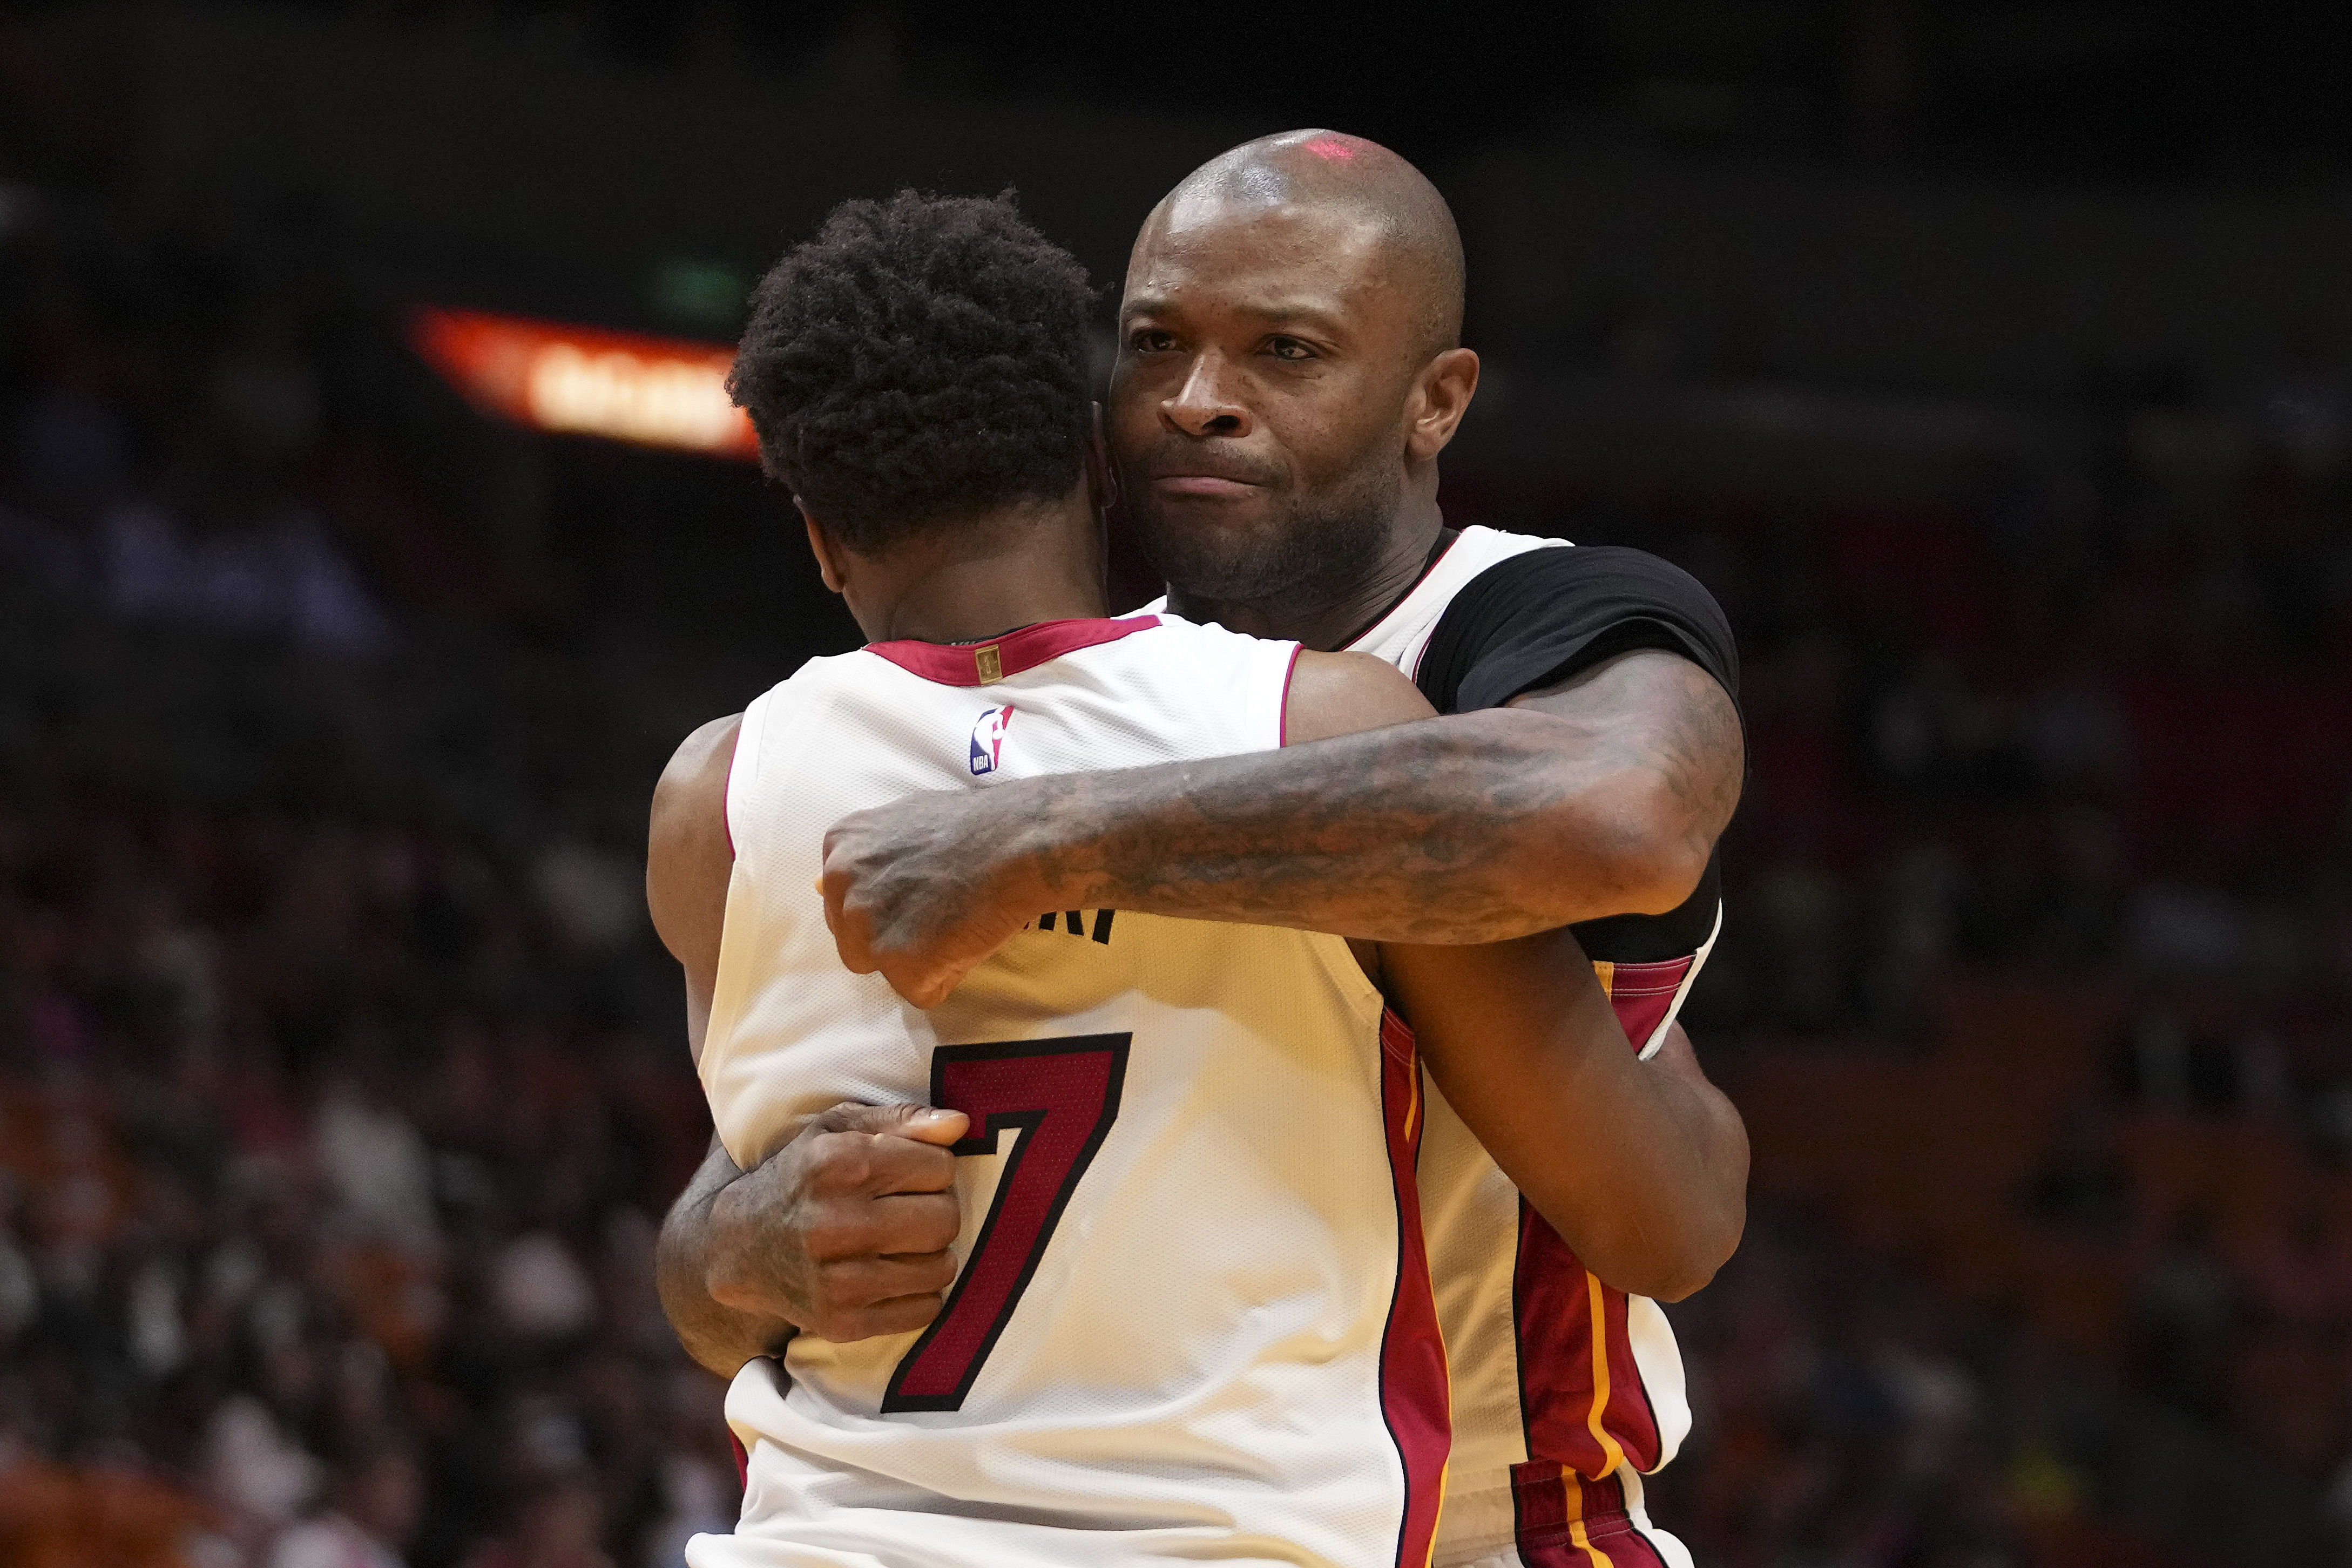 Snap! Miami Heat's Streak Ends At 27